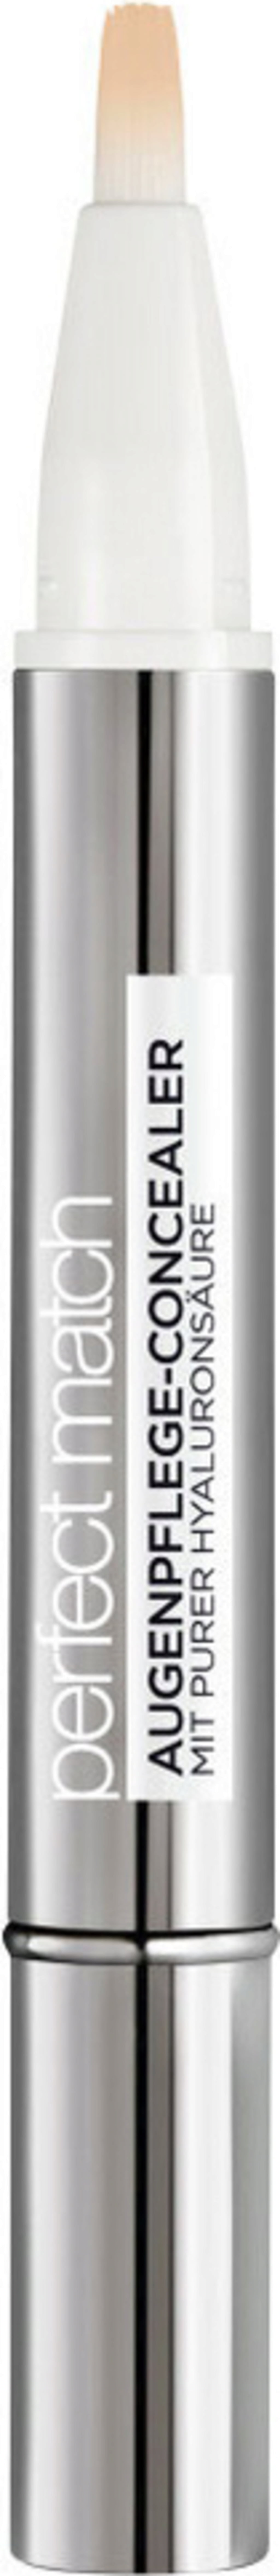  L'Oréal Paris True Match Eye Cream in a Concealer, 0.5